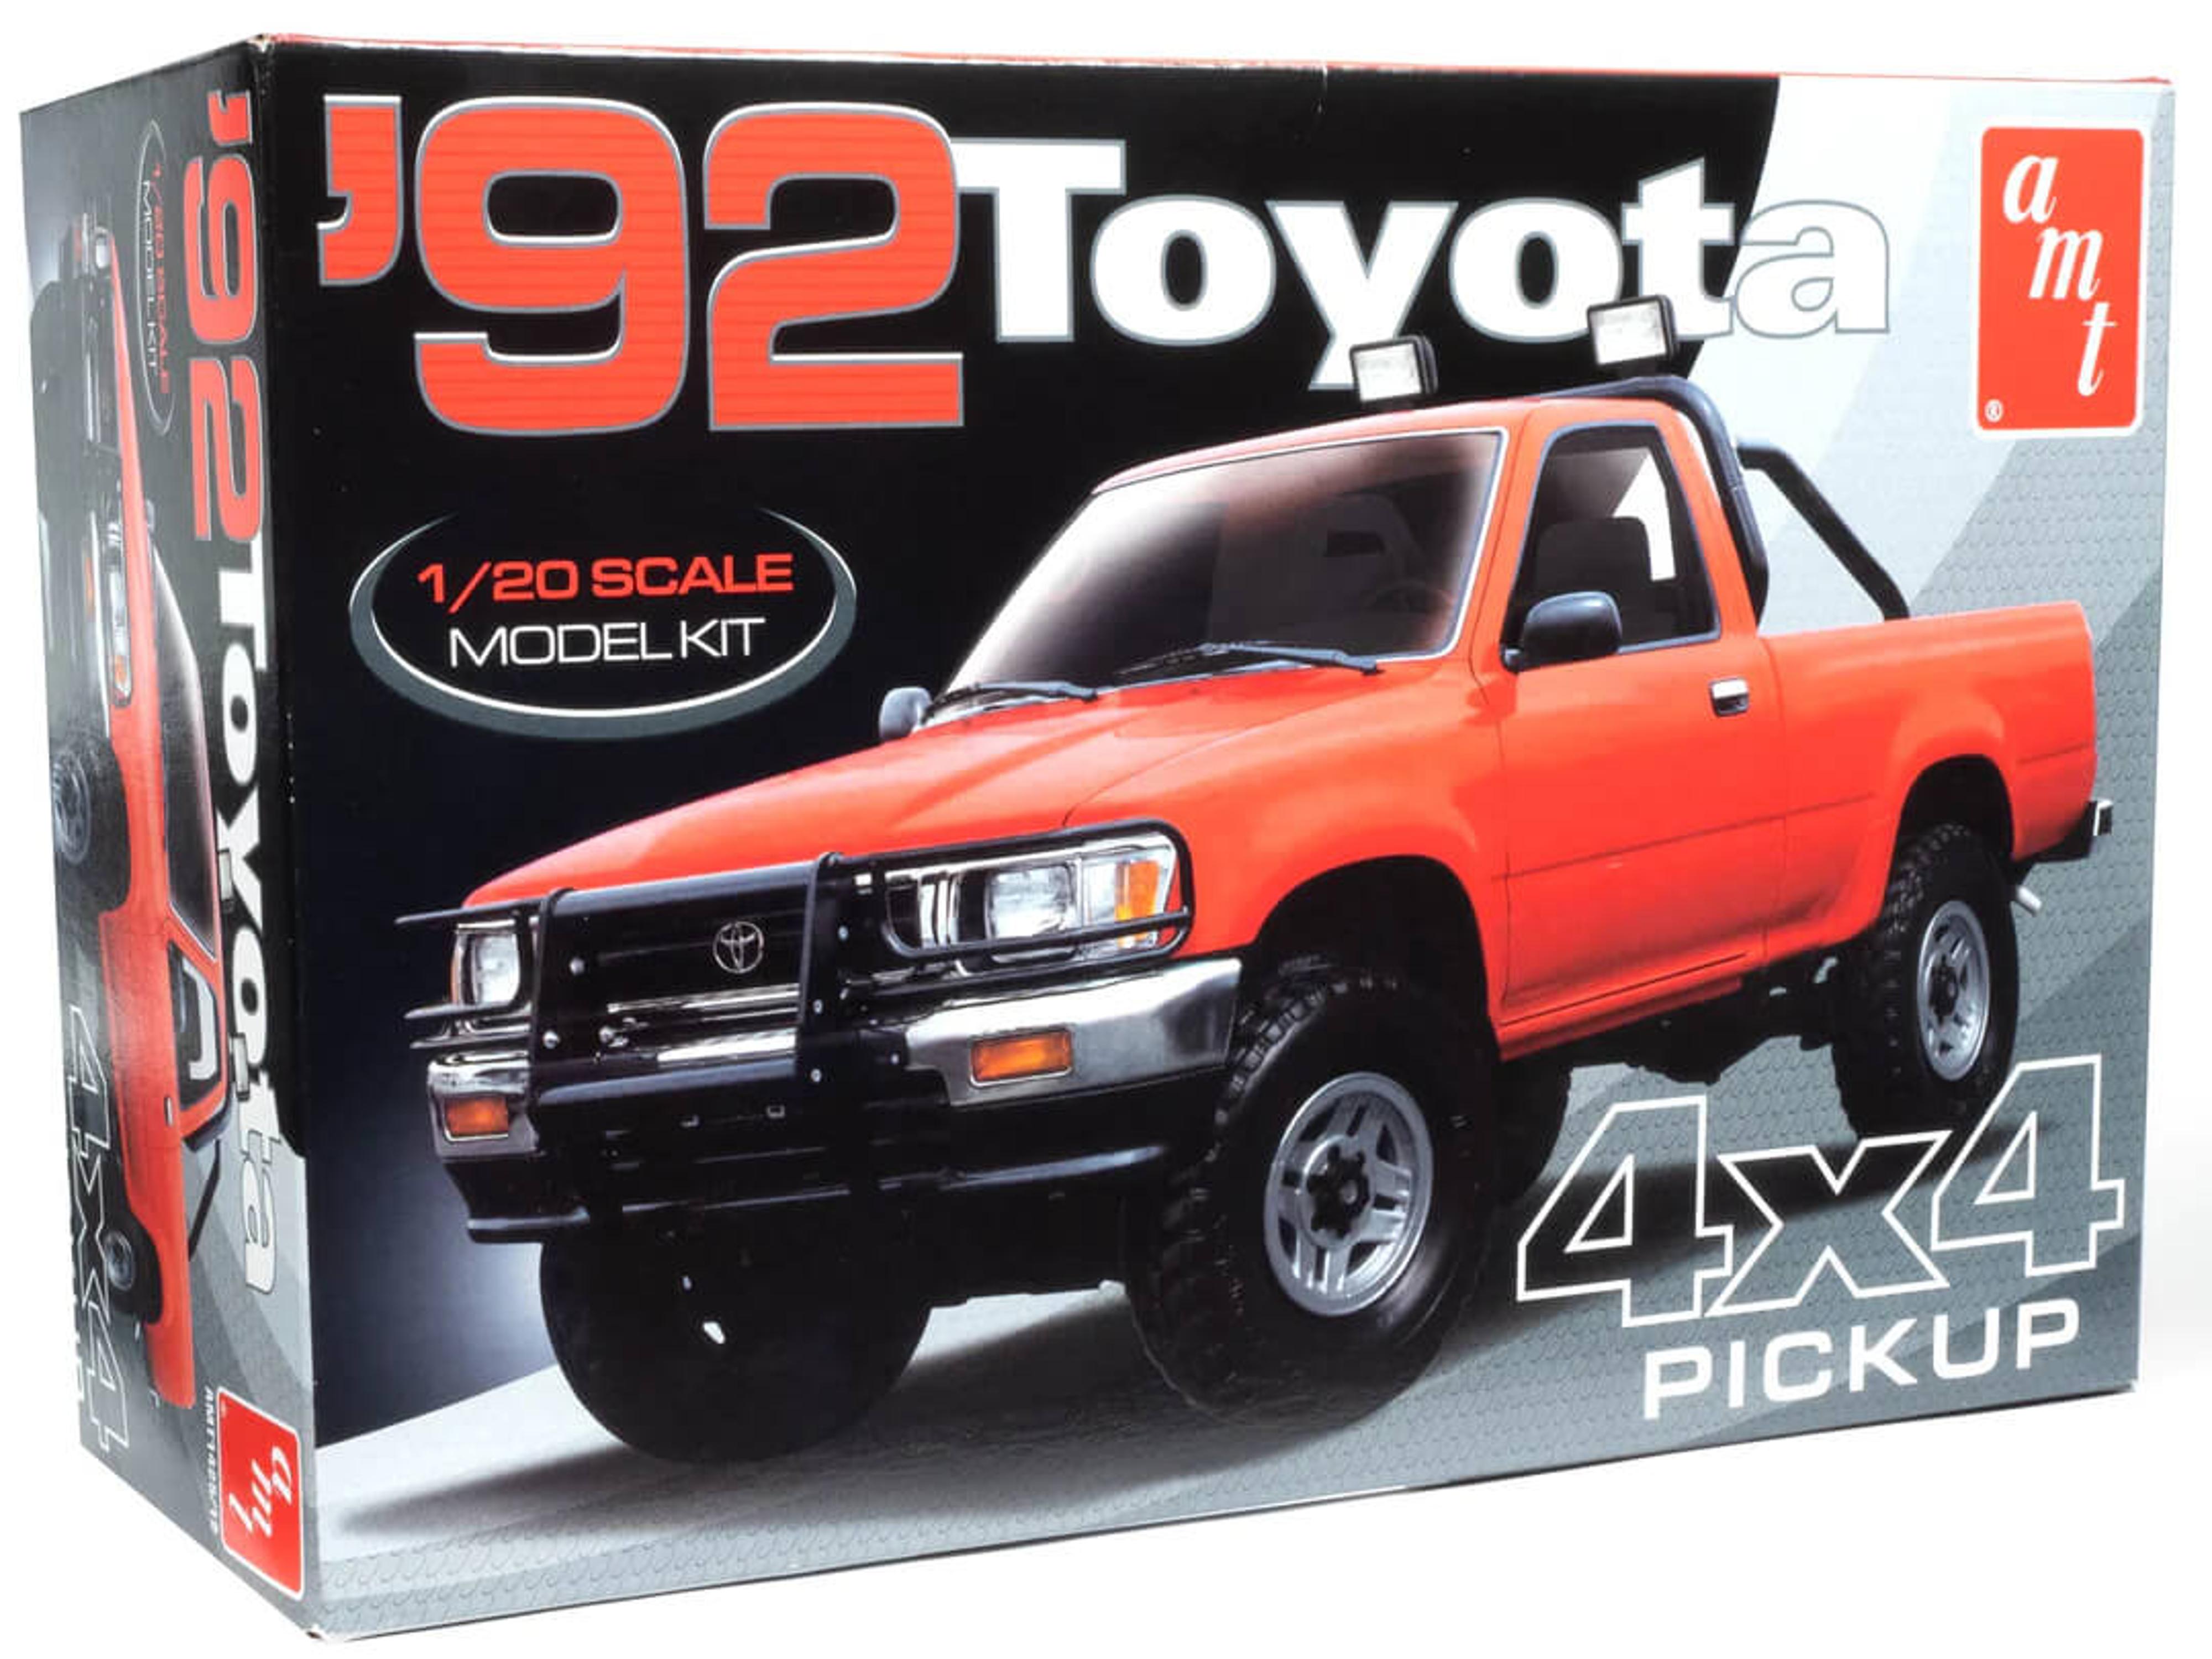 1/20 1992 Toyota 4x4 Pickup Model Kit